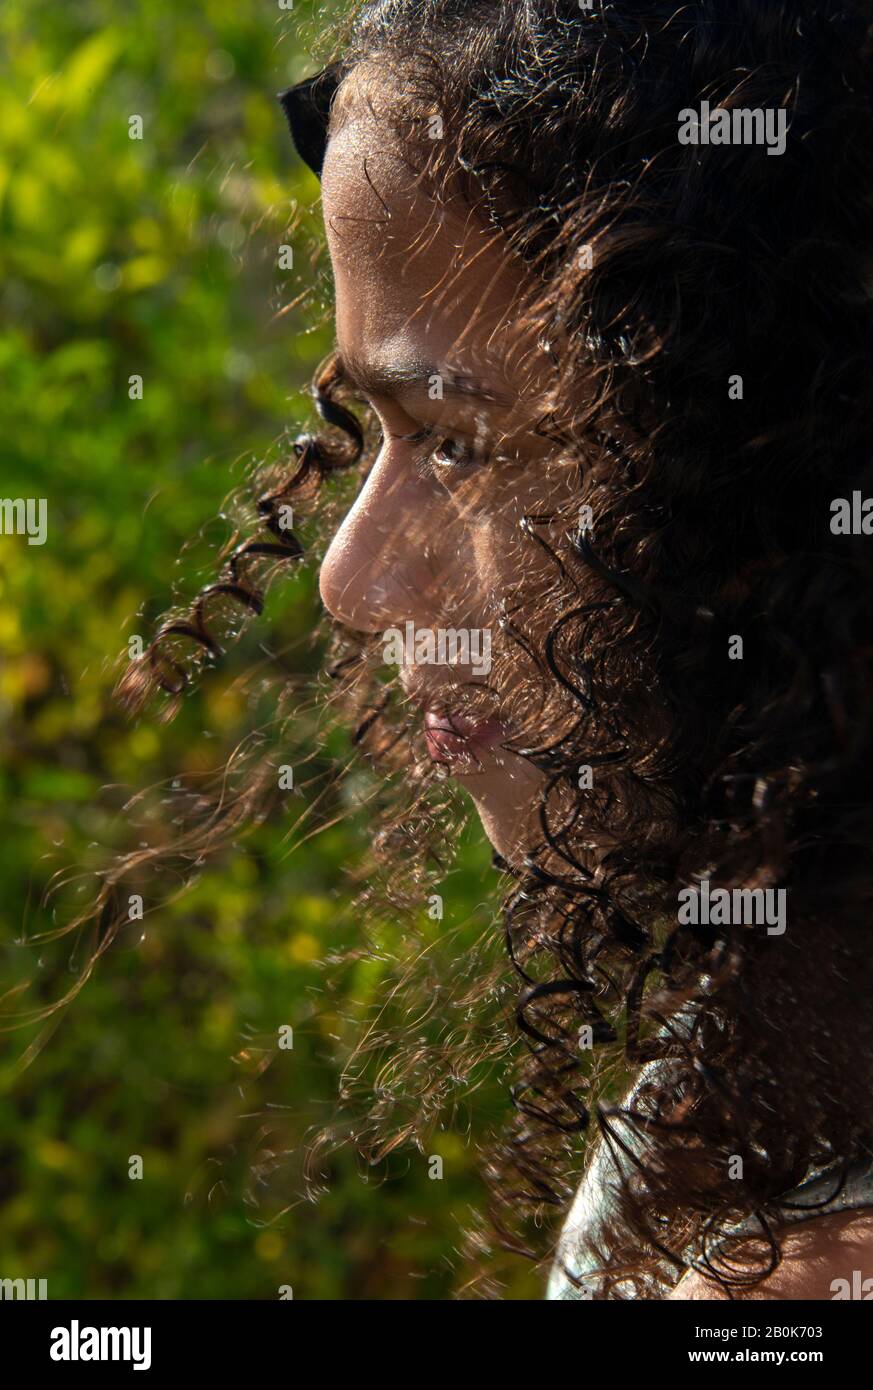 Profile of a Saudi Arabian girl with curly hair Stock Photo